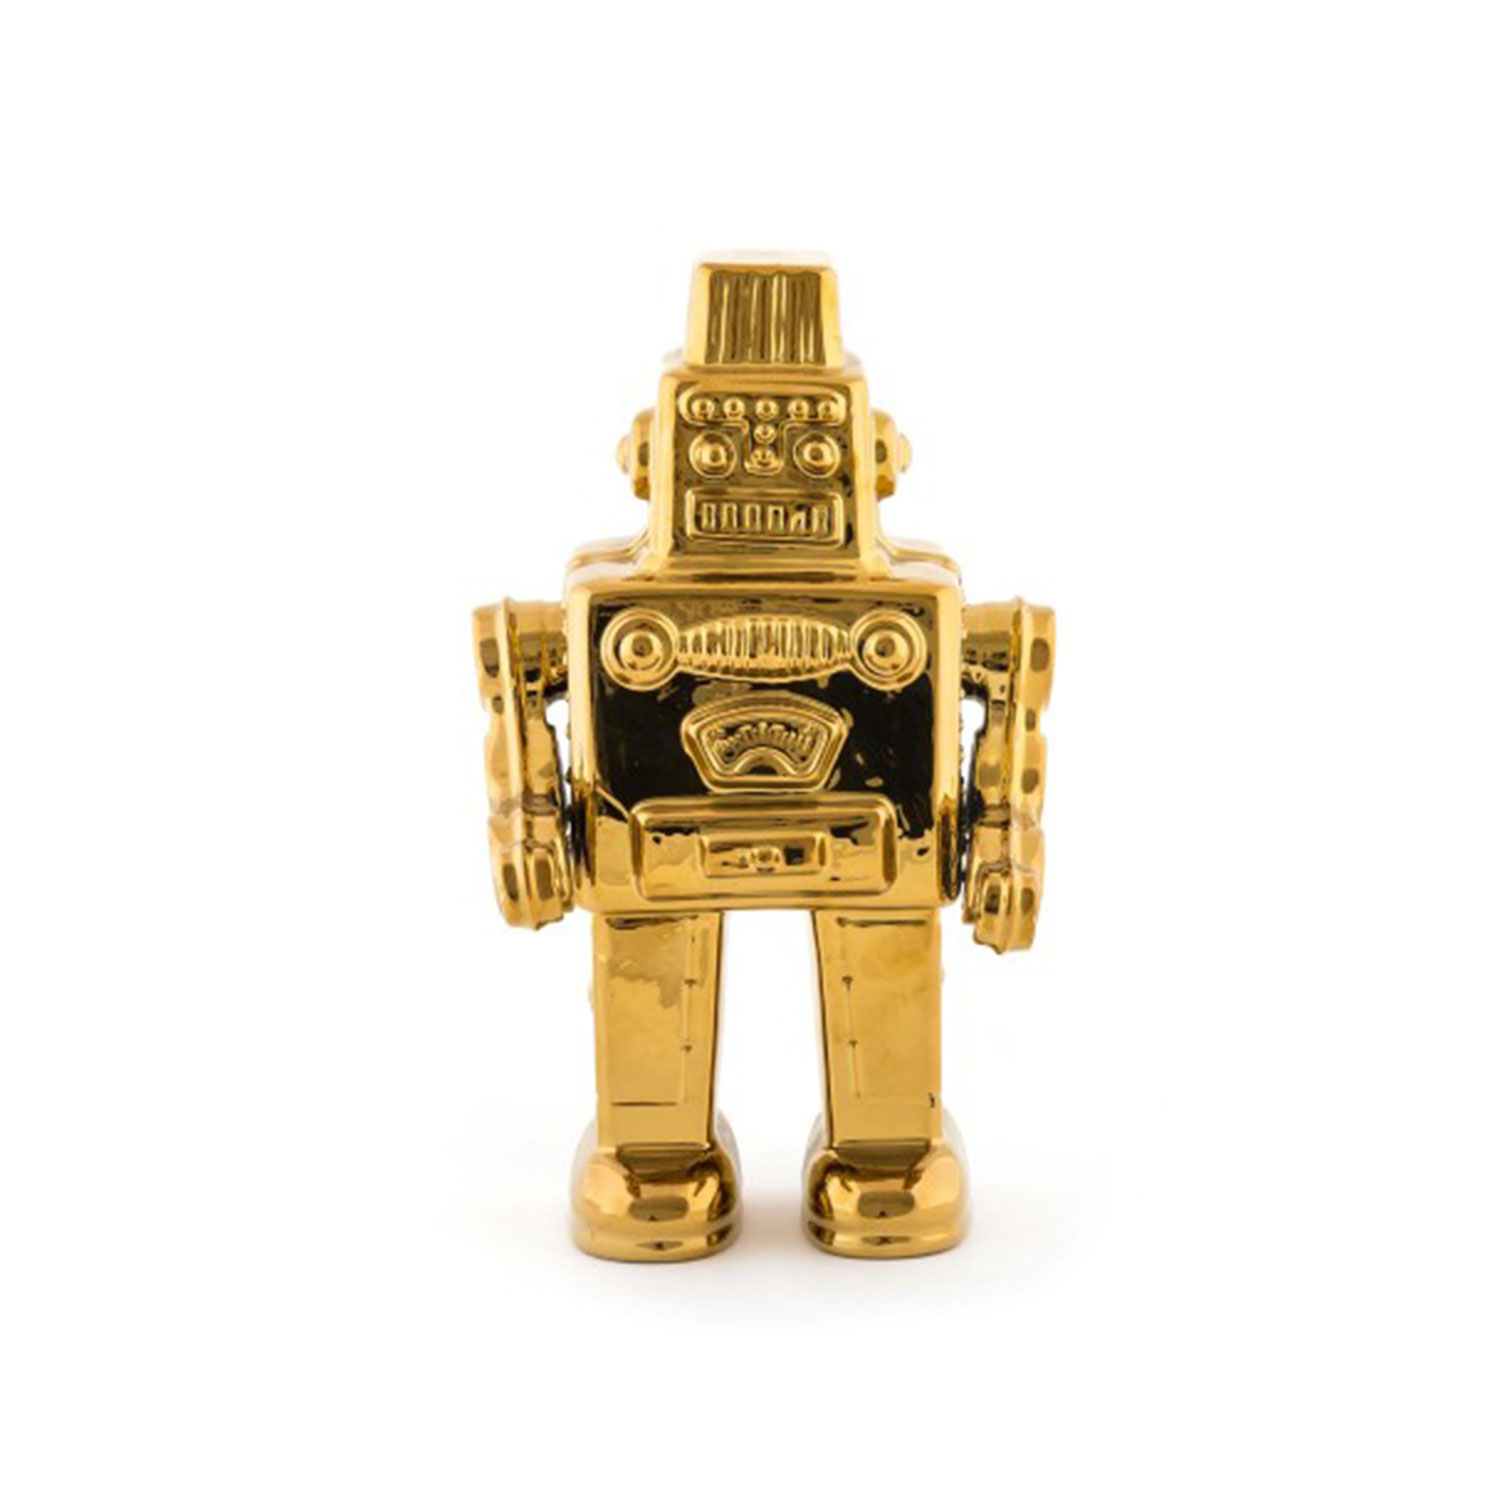 My Robot Porslinsskulptur, Limited Gold Edition